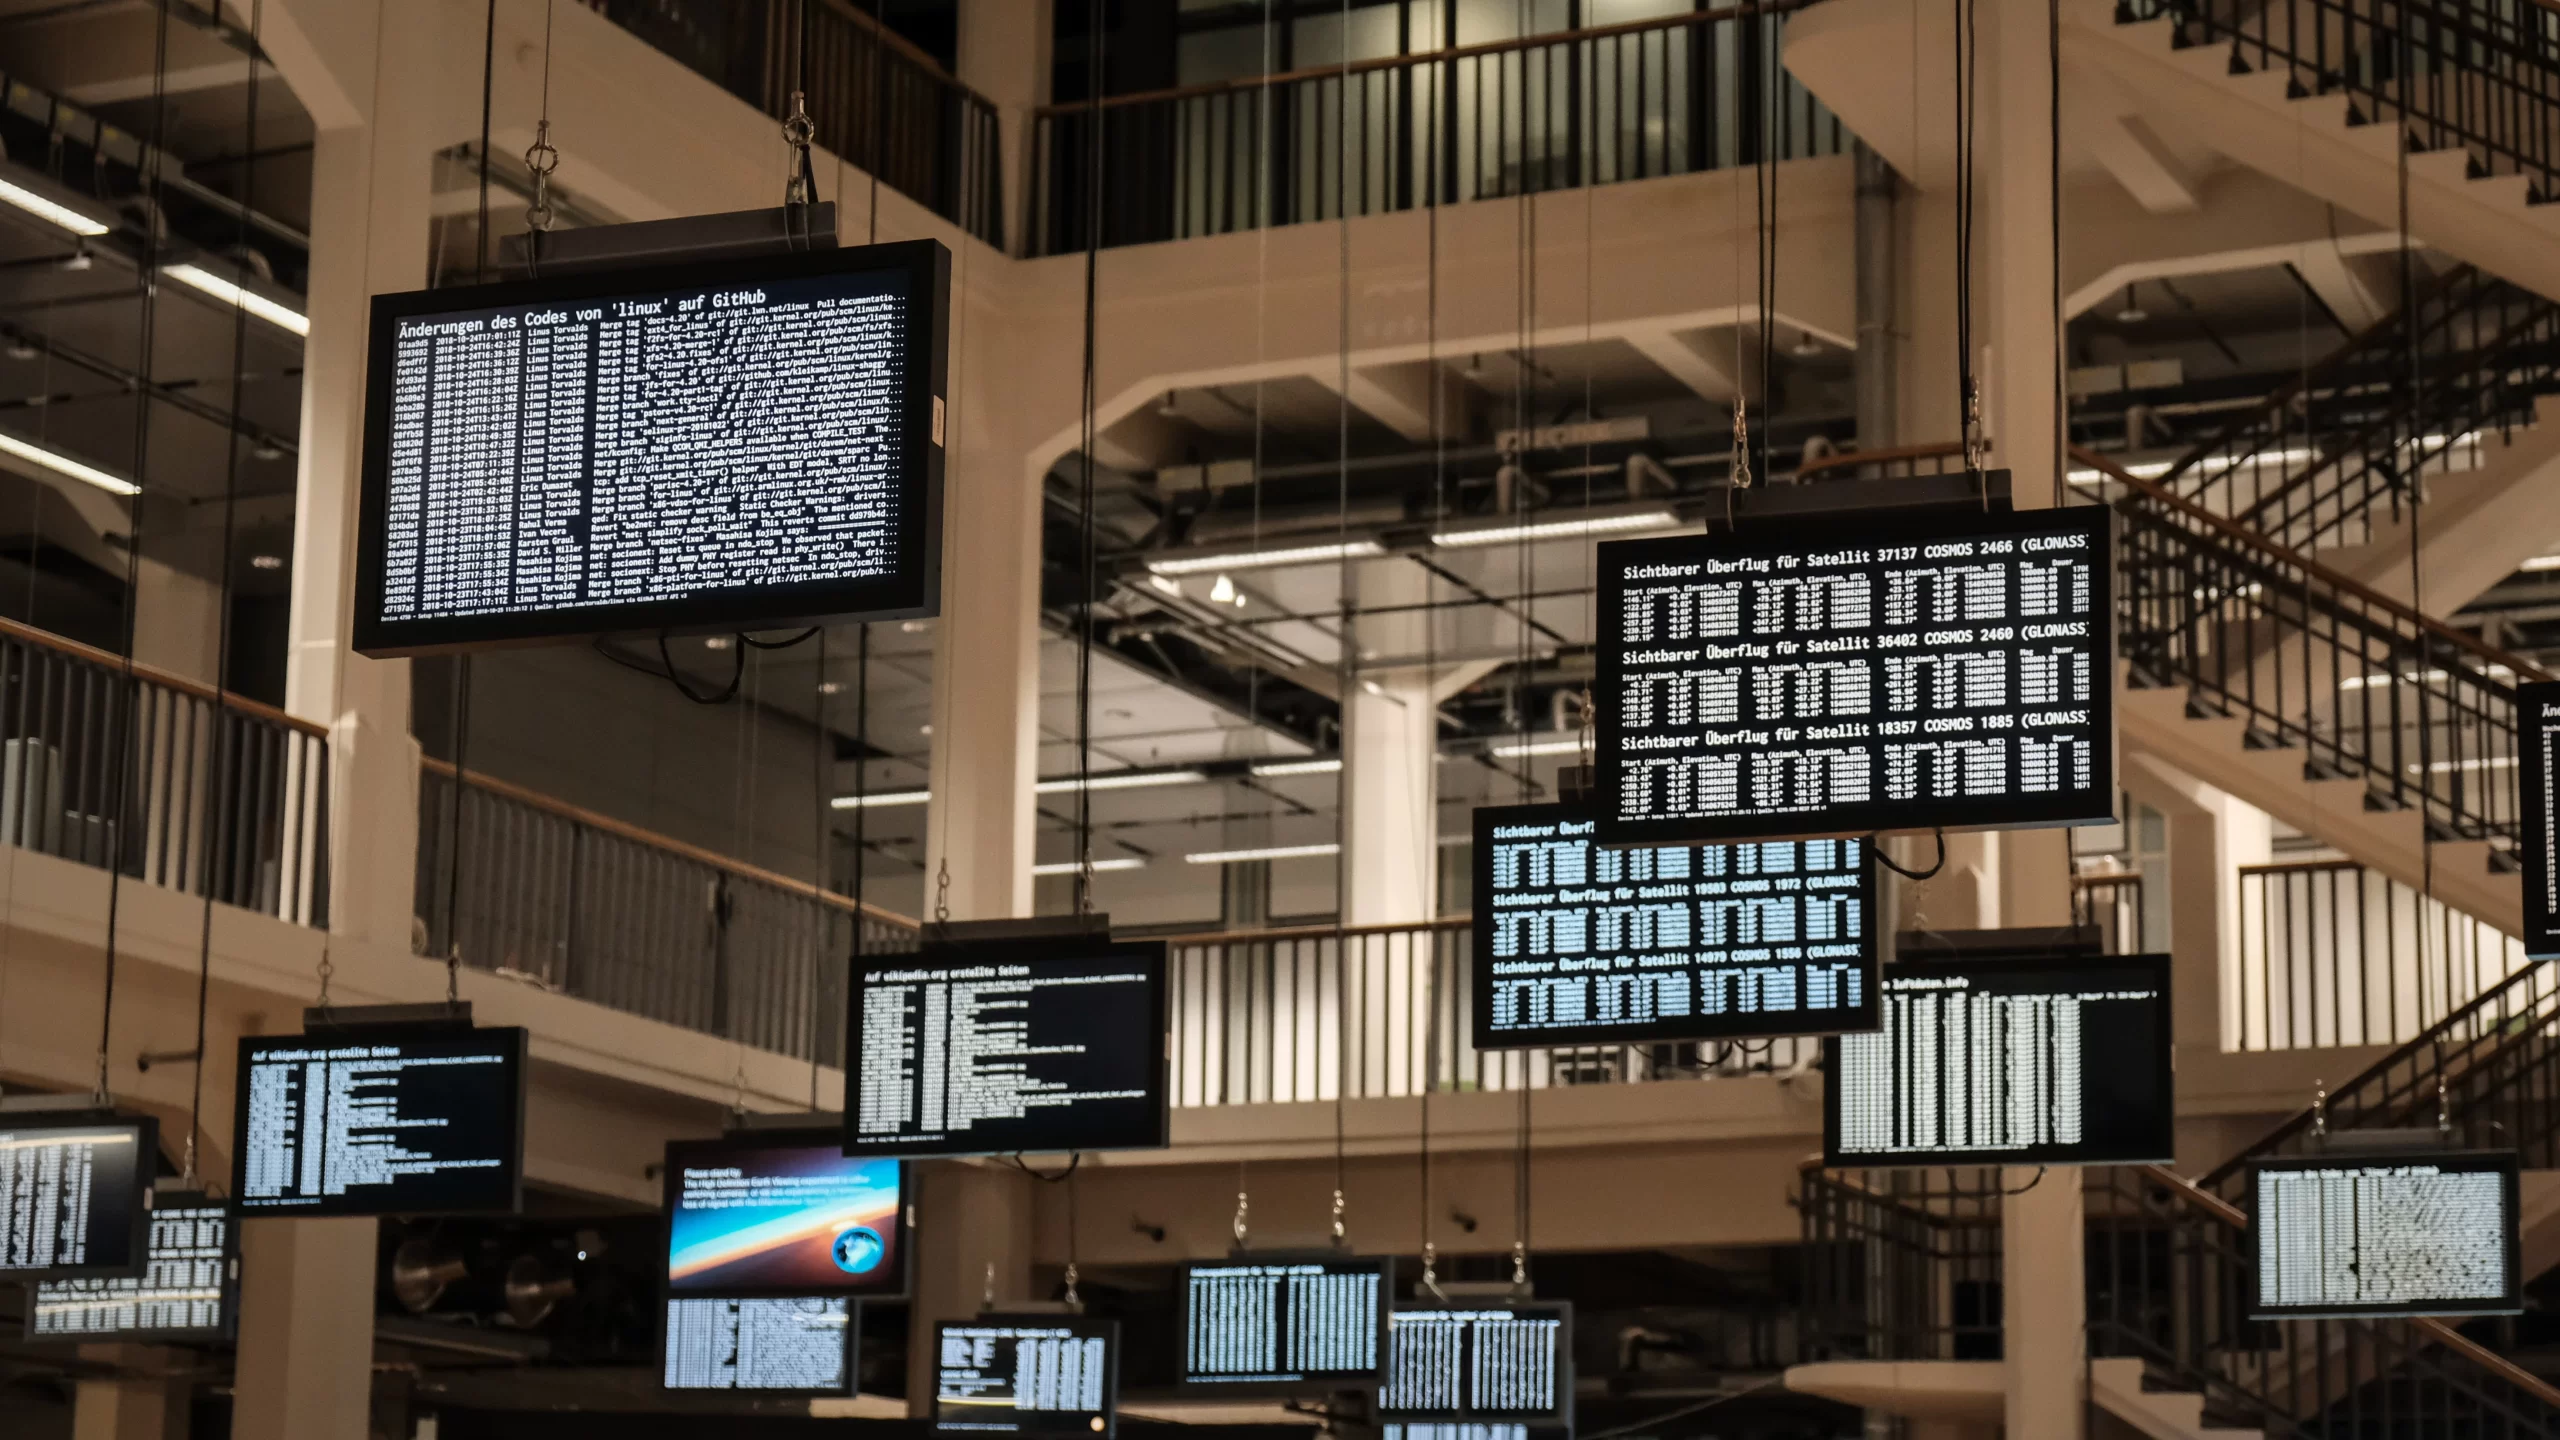 Database screens in overhead display